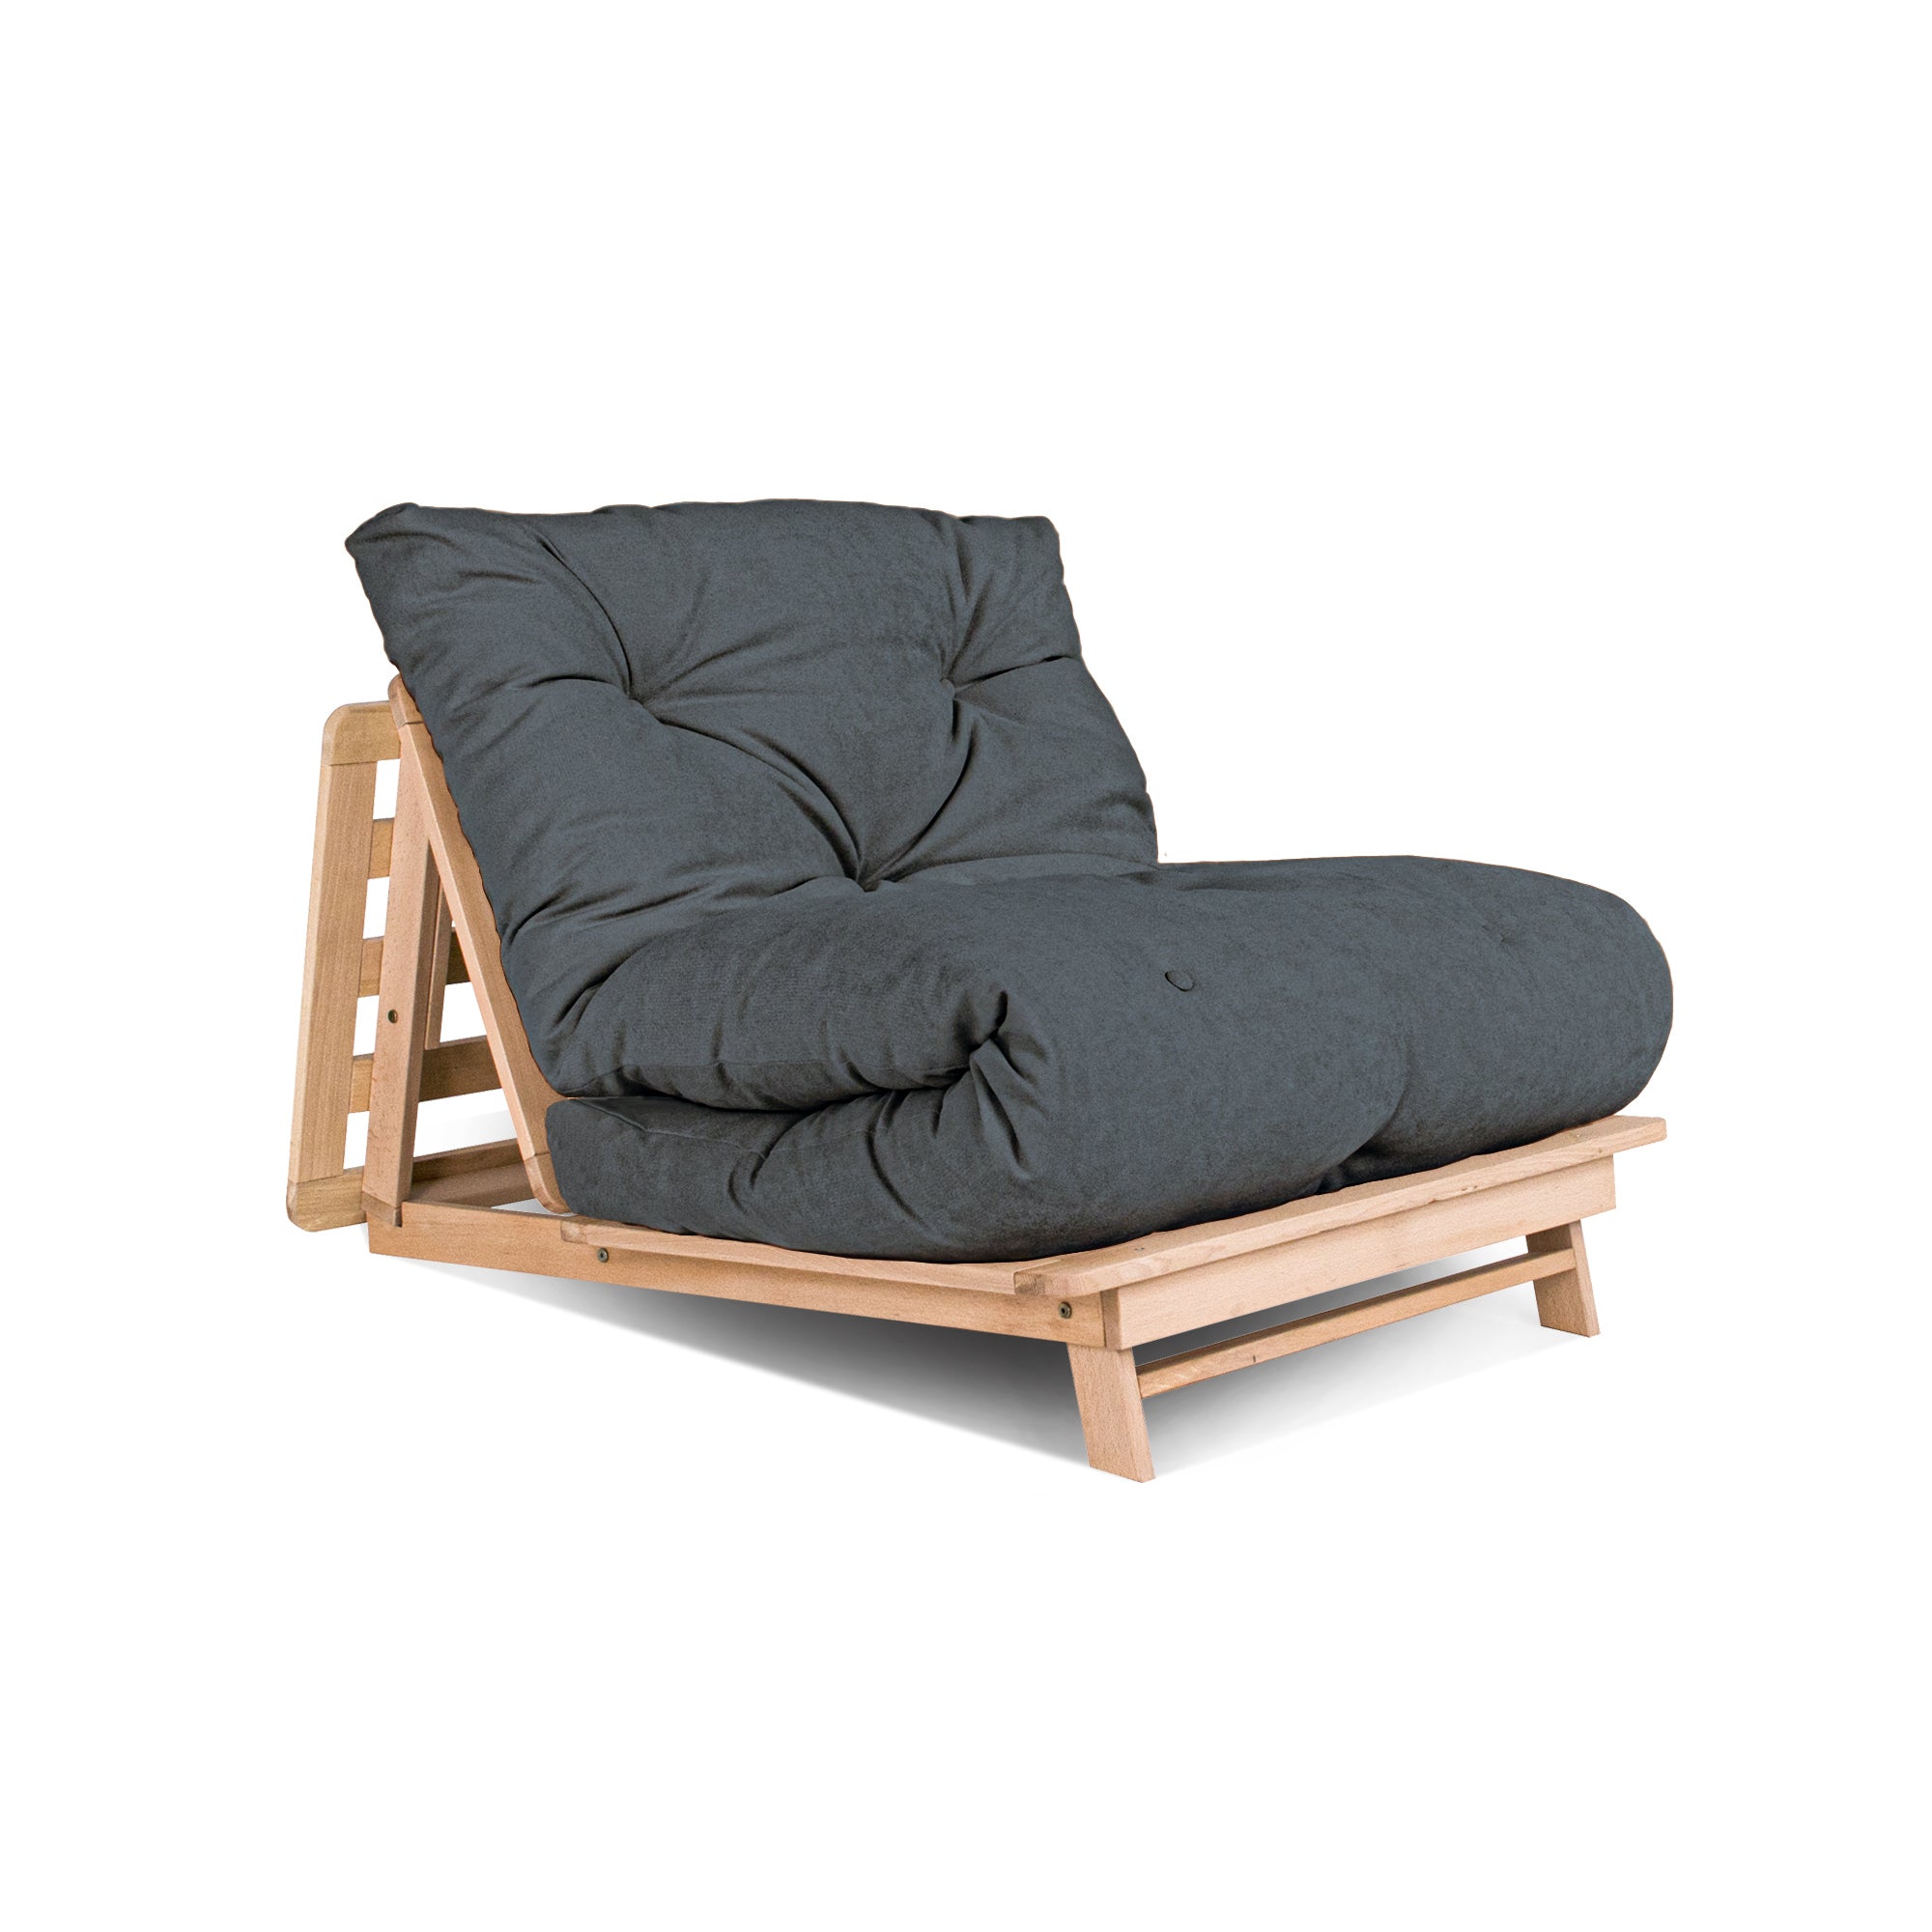 LAYTI-90 Futon Chair, Beech Wood Frame, Natural Colour-graphite fabric